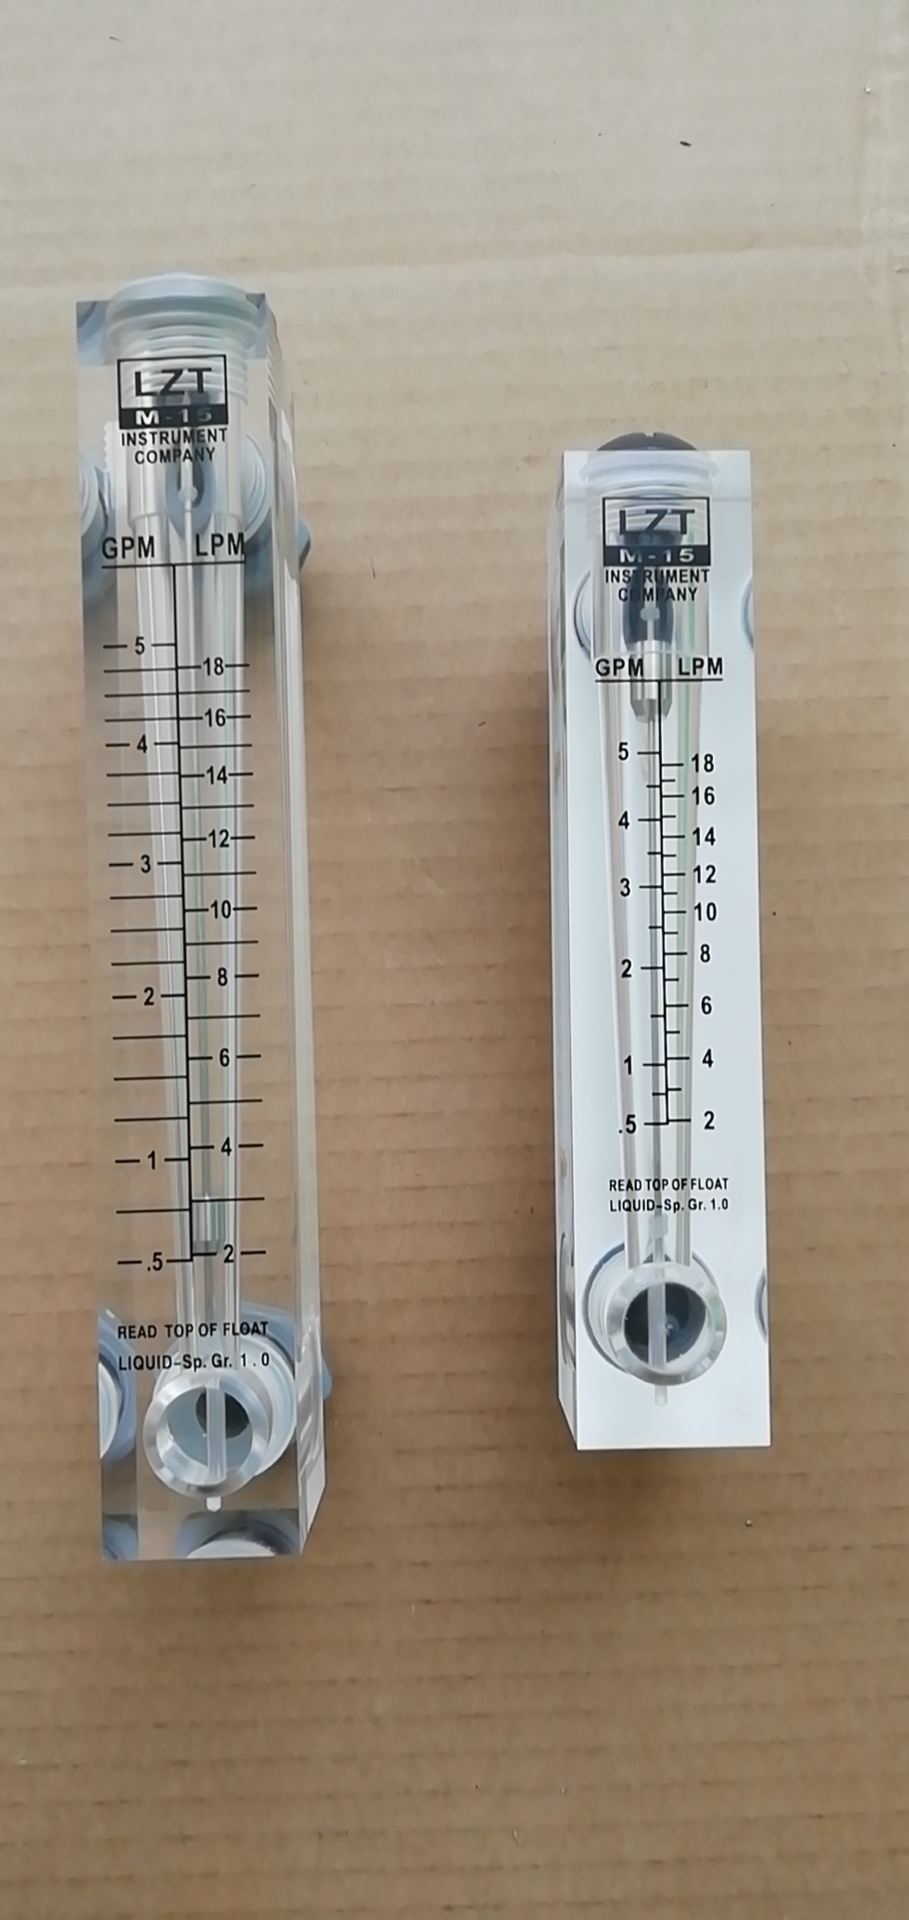 Nxtop Water Flow Meter Panel Type Flowmeter LZT G-15 0.1-1 GPM 0.5-4 LPM 